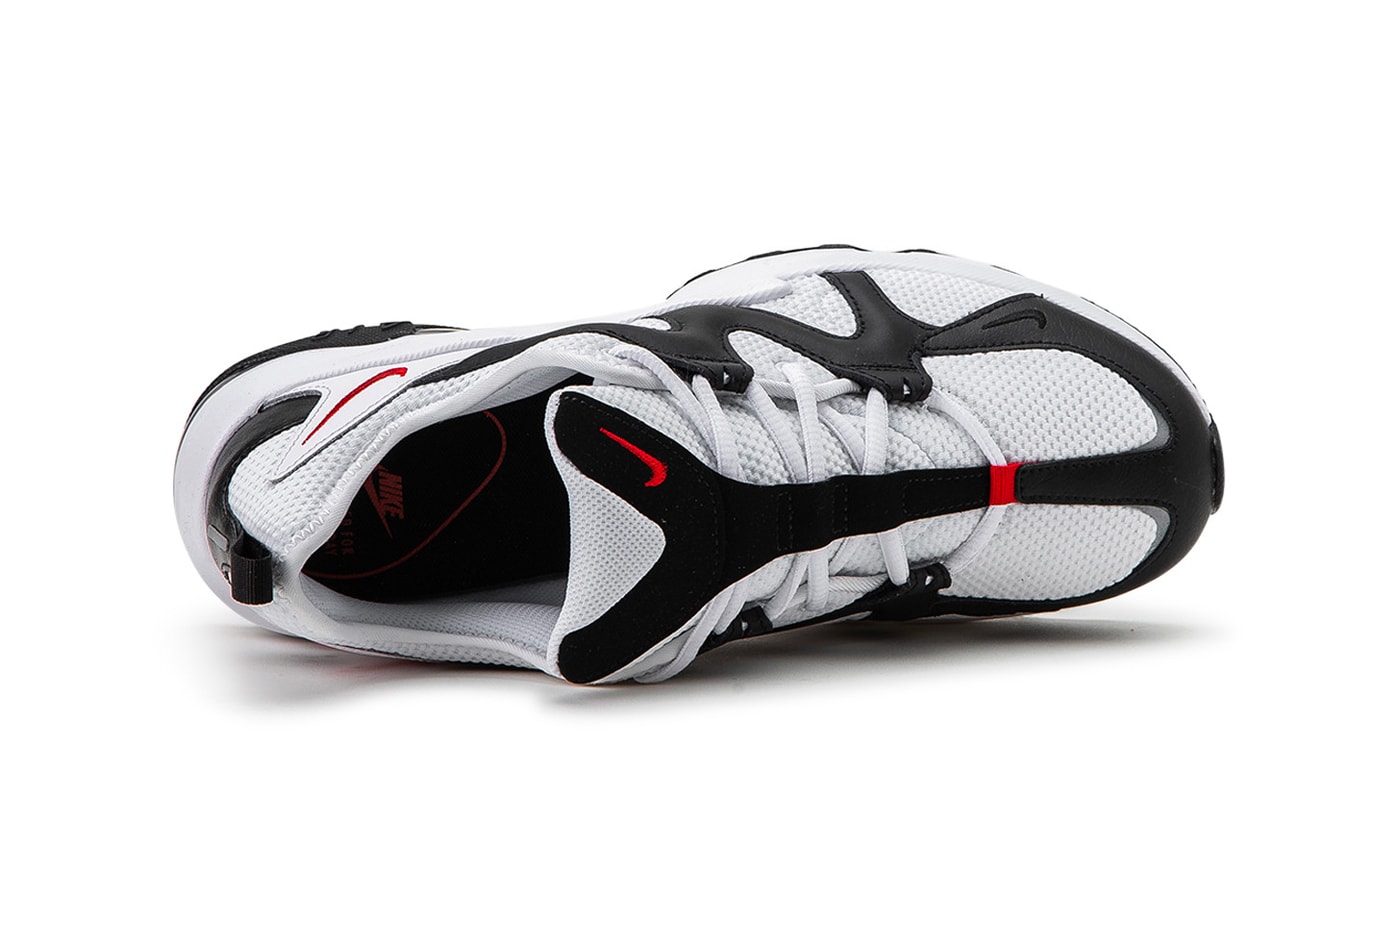 Nike Air Max Graviton White Black Chunky 90s 2013 retro mesh 3M detail leather suede Swoosh footwear sneaker red 